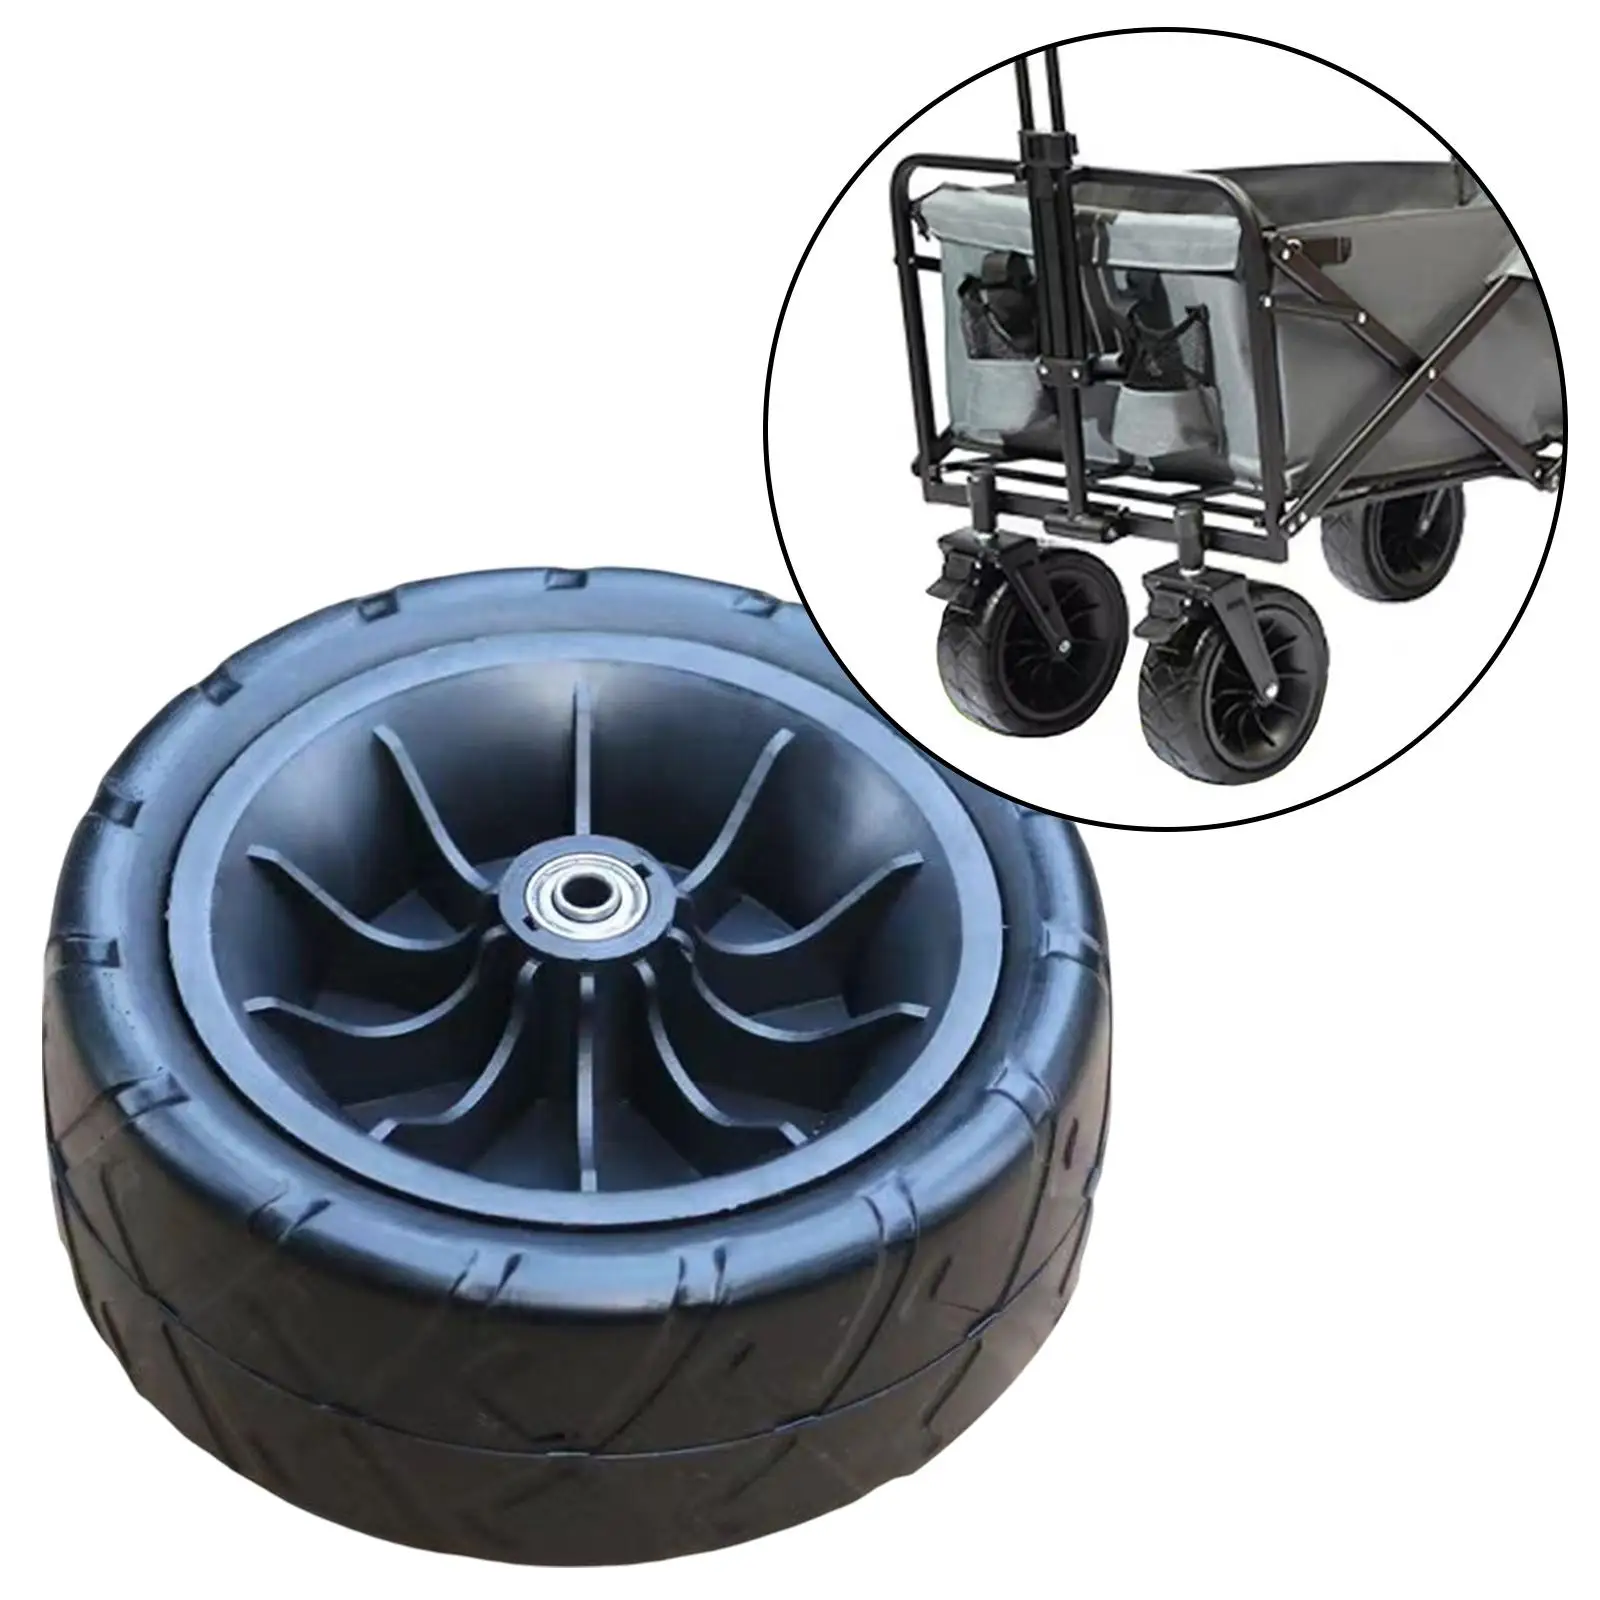 Replacement Wheel for Wagon Garden Cart Shopping Trolley Lawn Mower Wheels